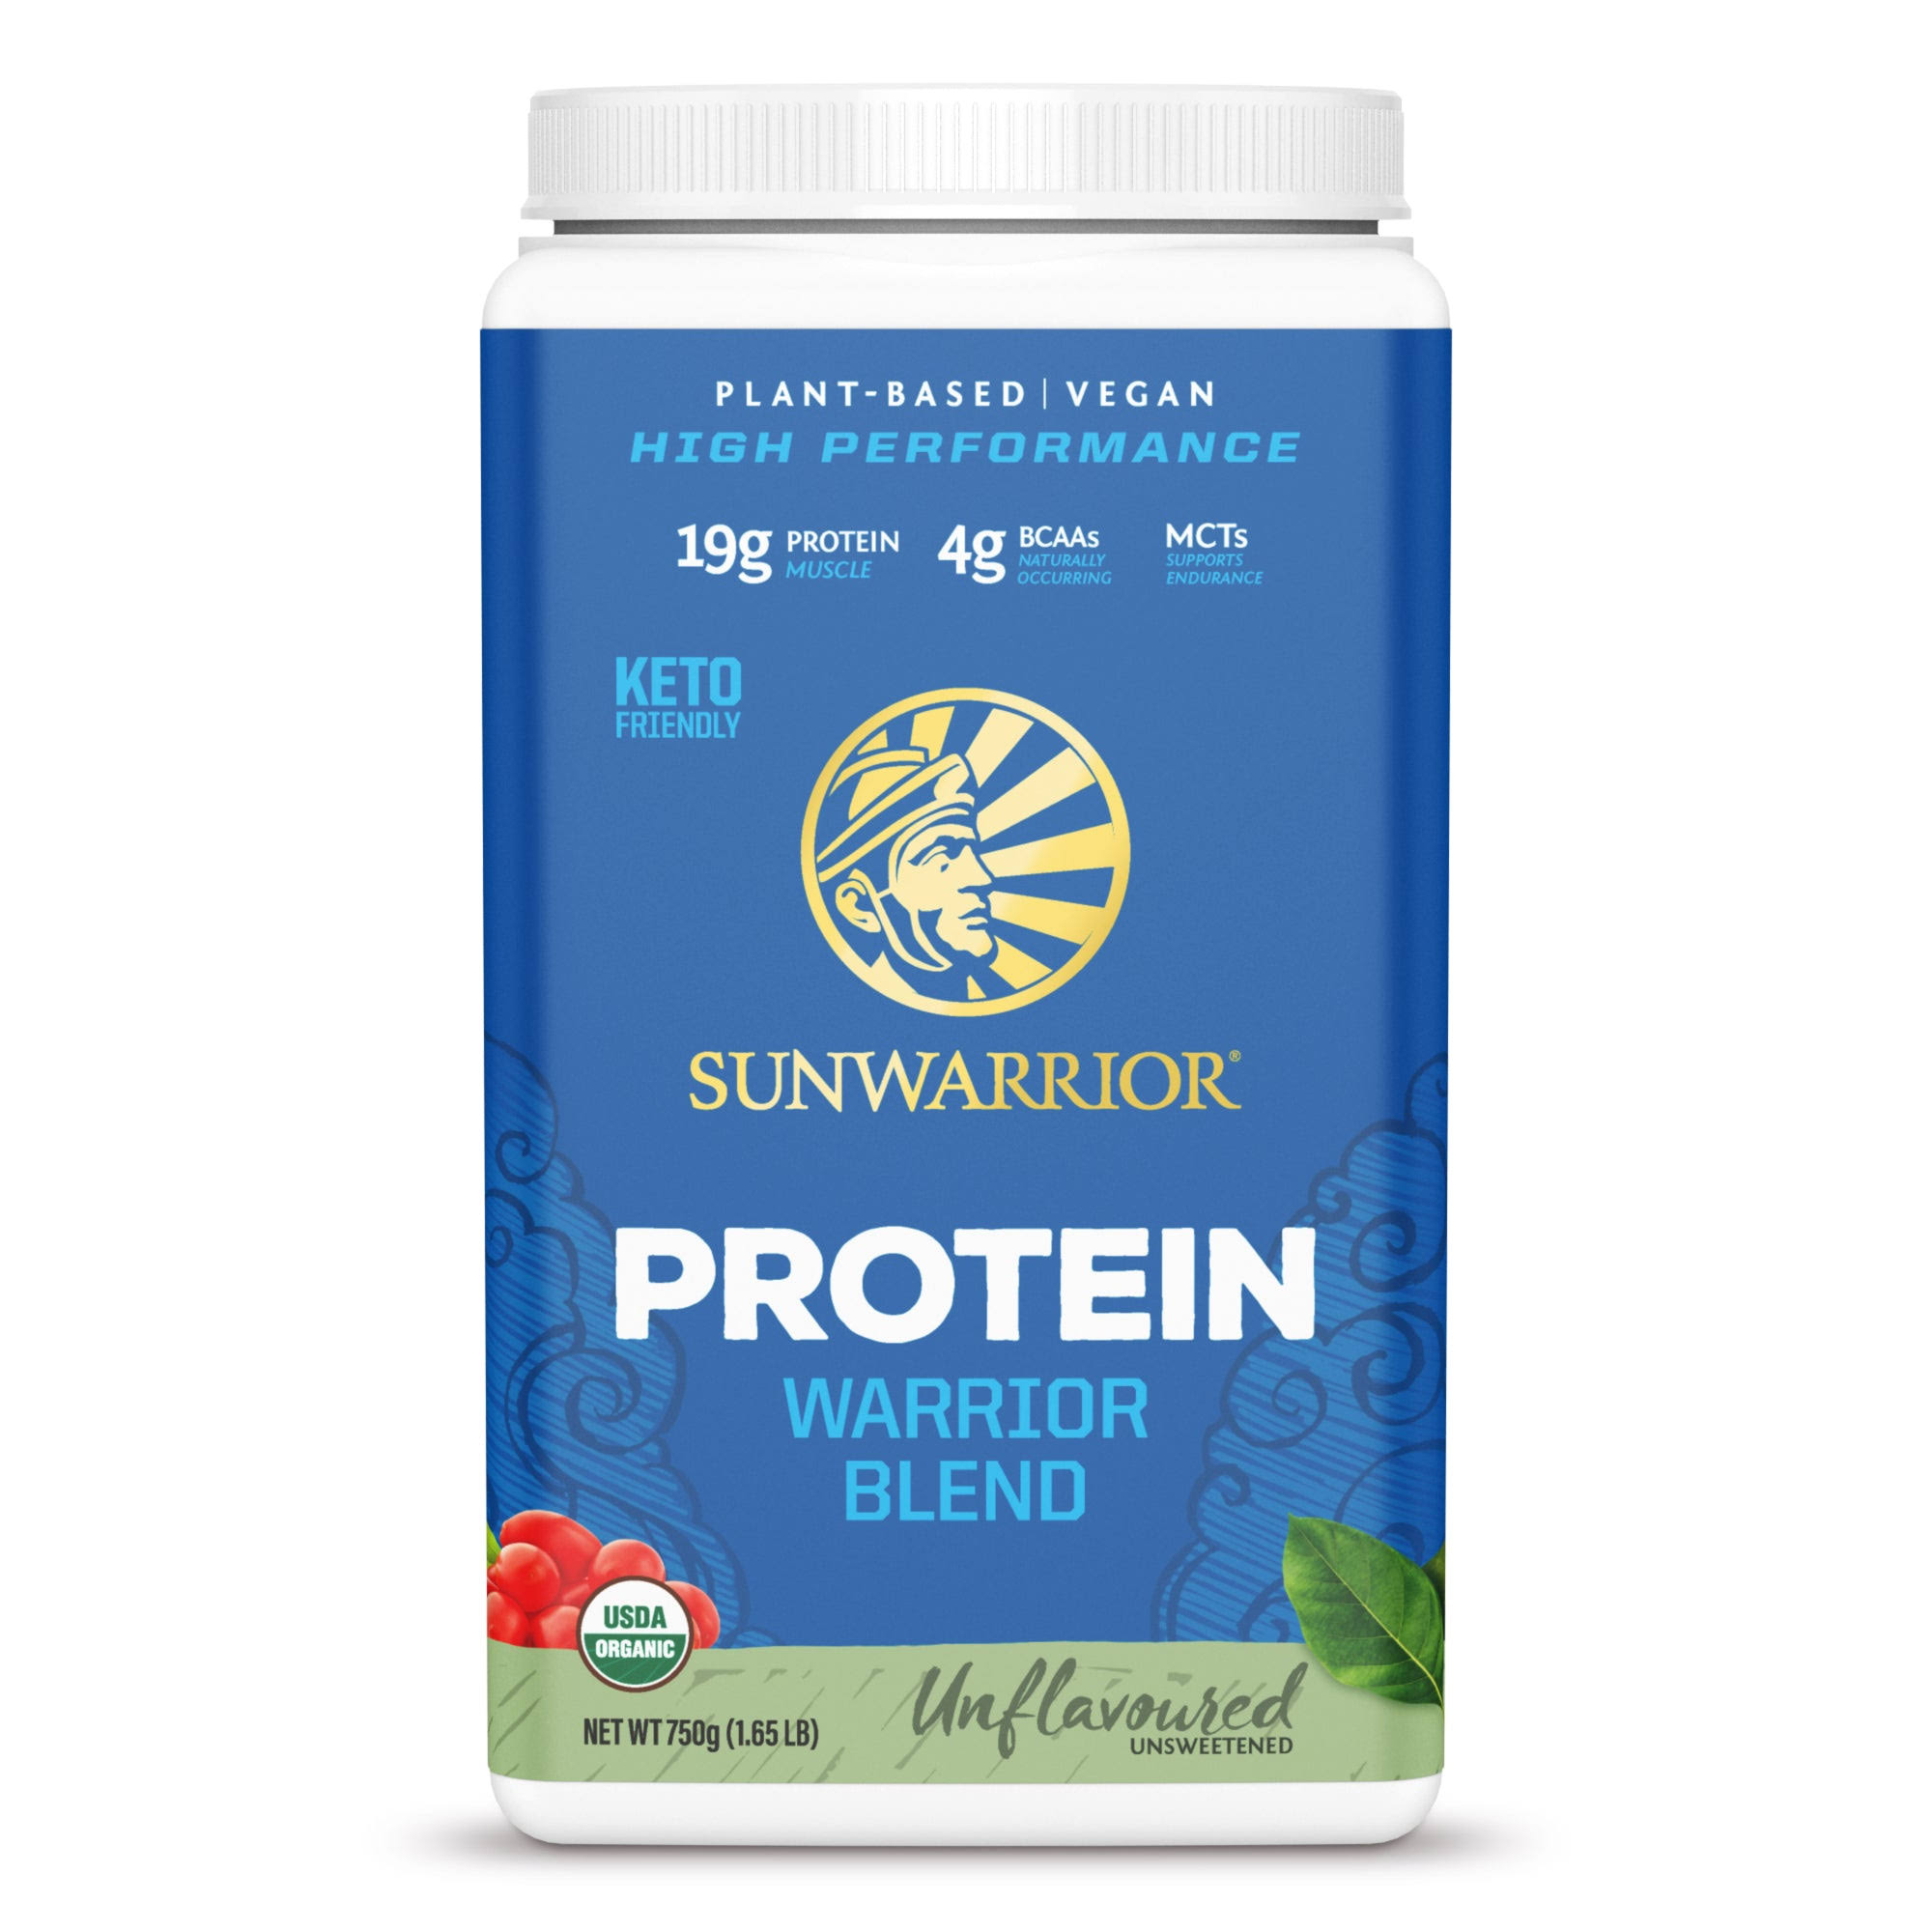 Sunwarrior Warrior Blend Raw Plant-Based Organic Protein - Natural, 30 Servings